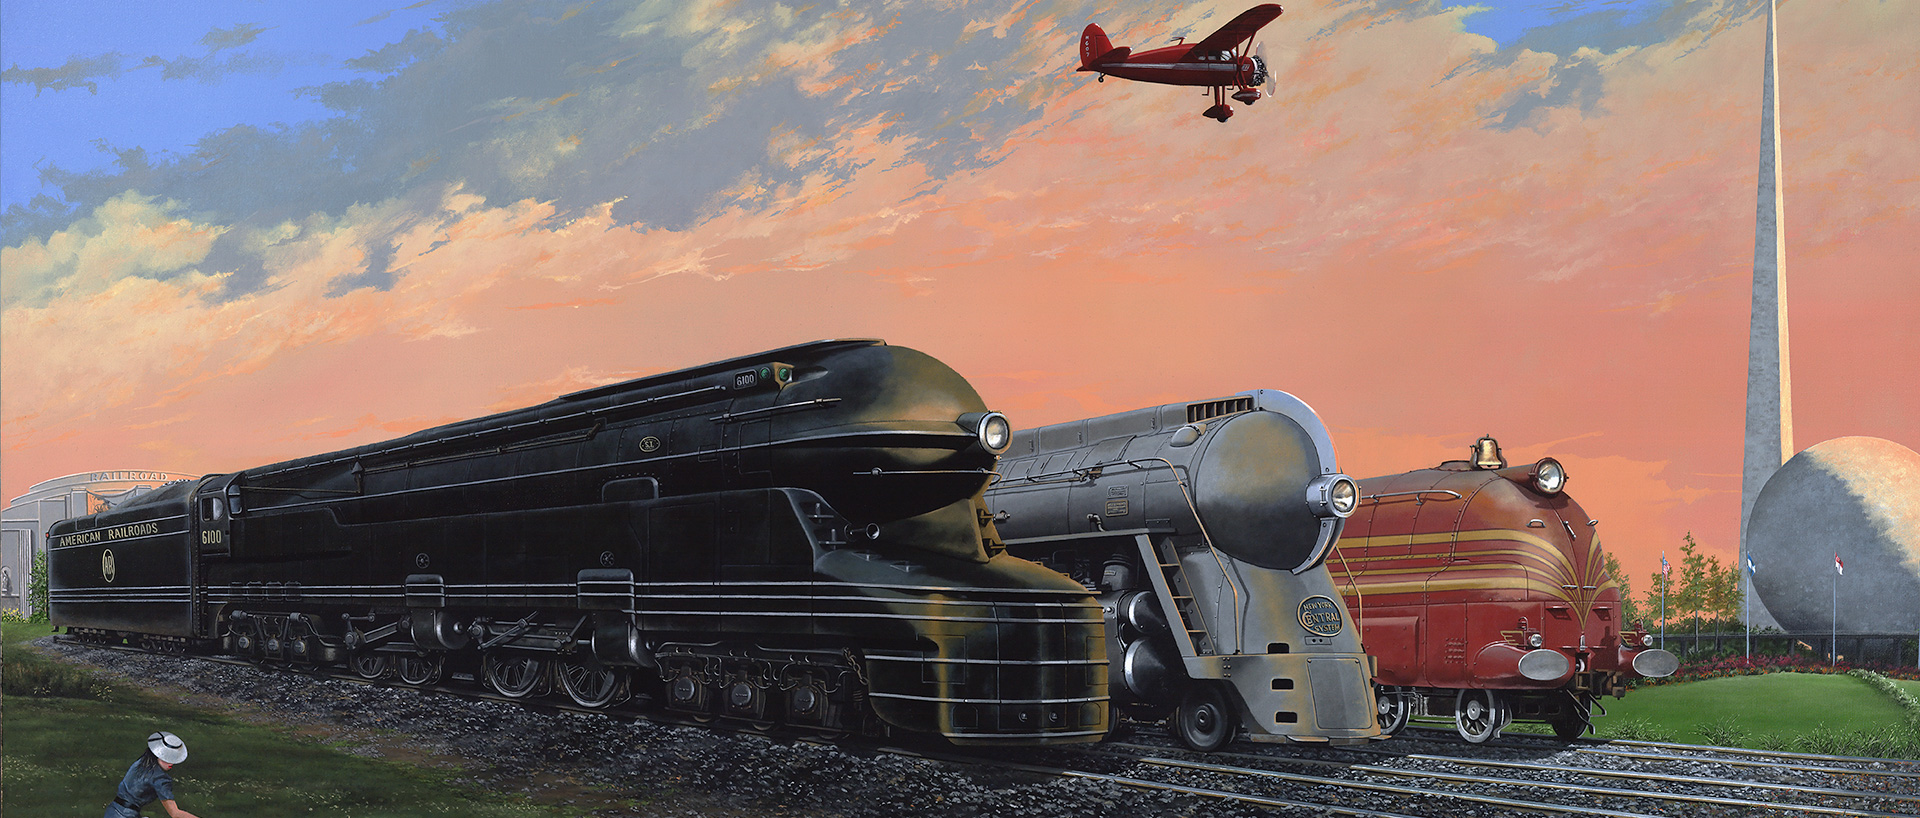 Train Art, Train Art For Sale, Train Art – Jim Jordan1920 x 818